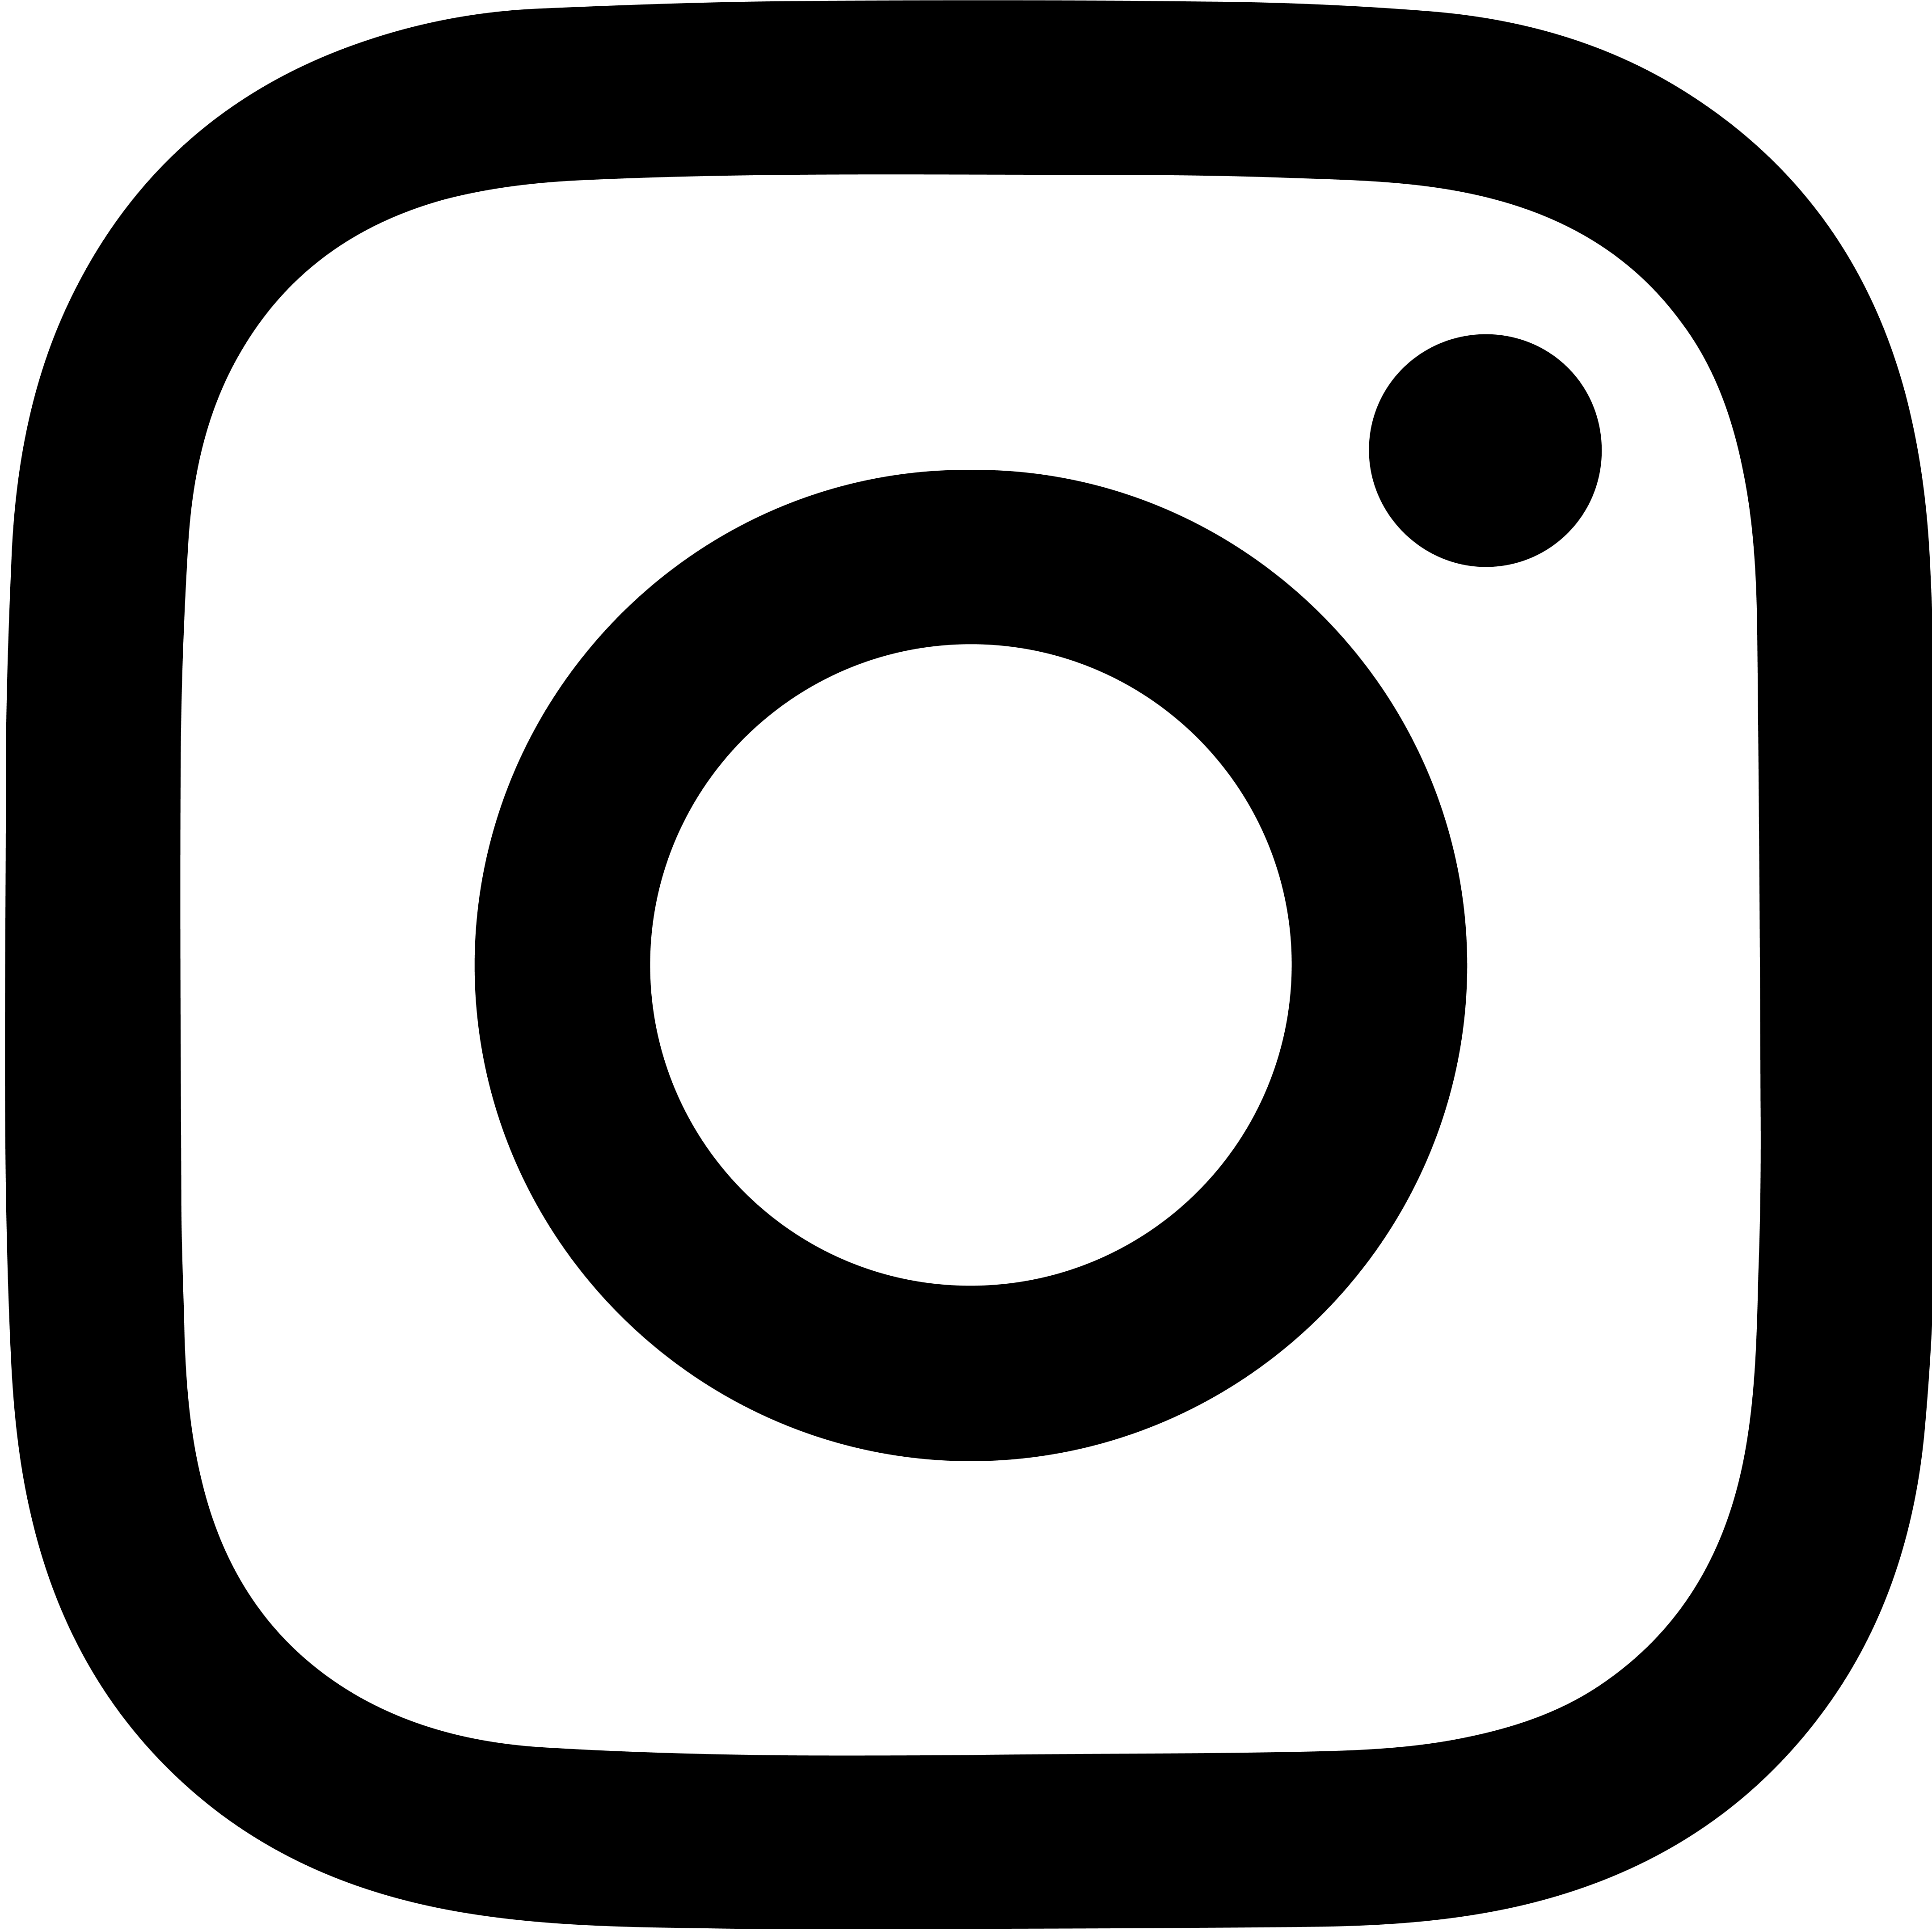 Circuitnoise on Instagram